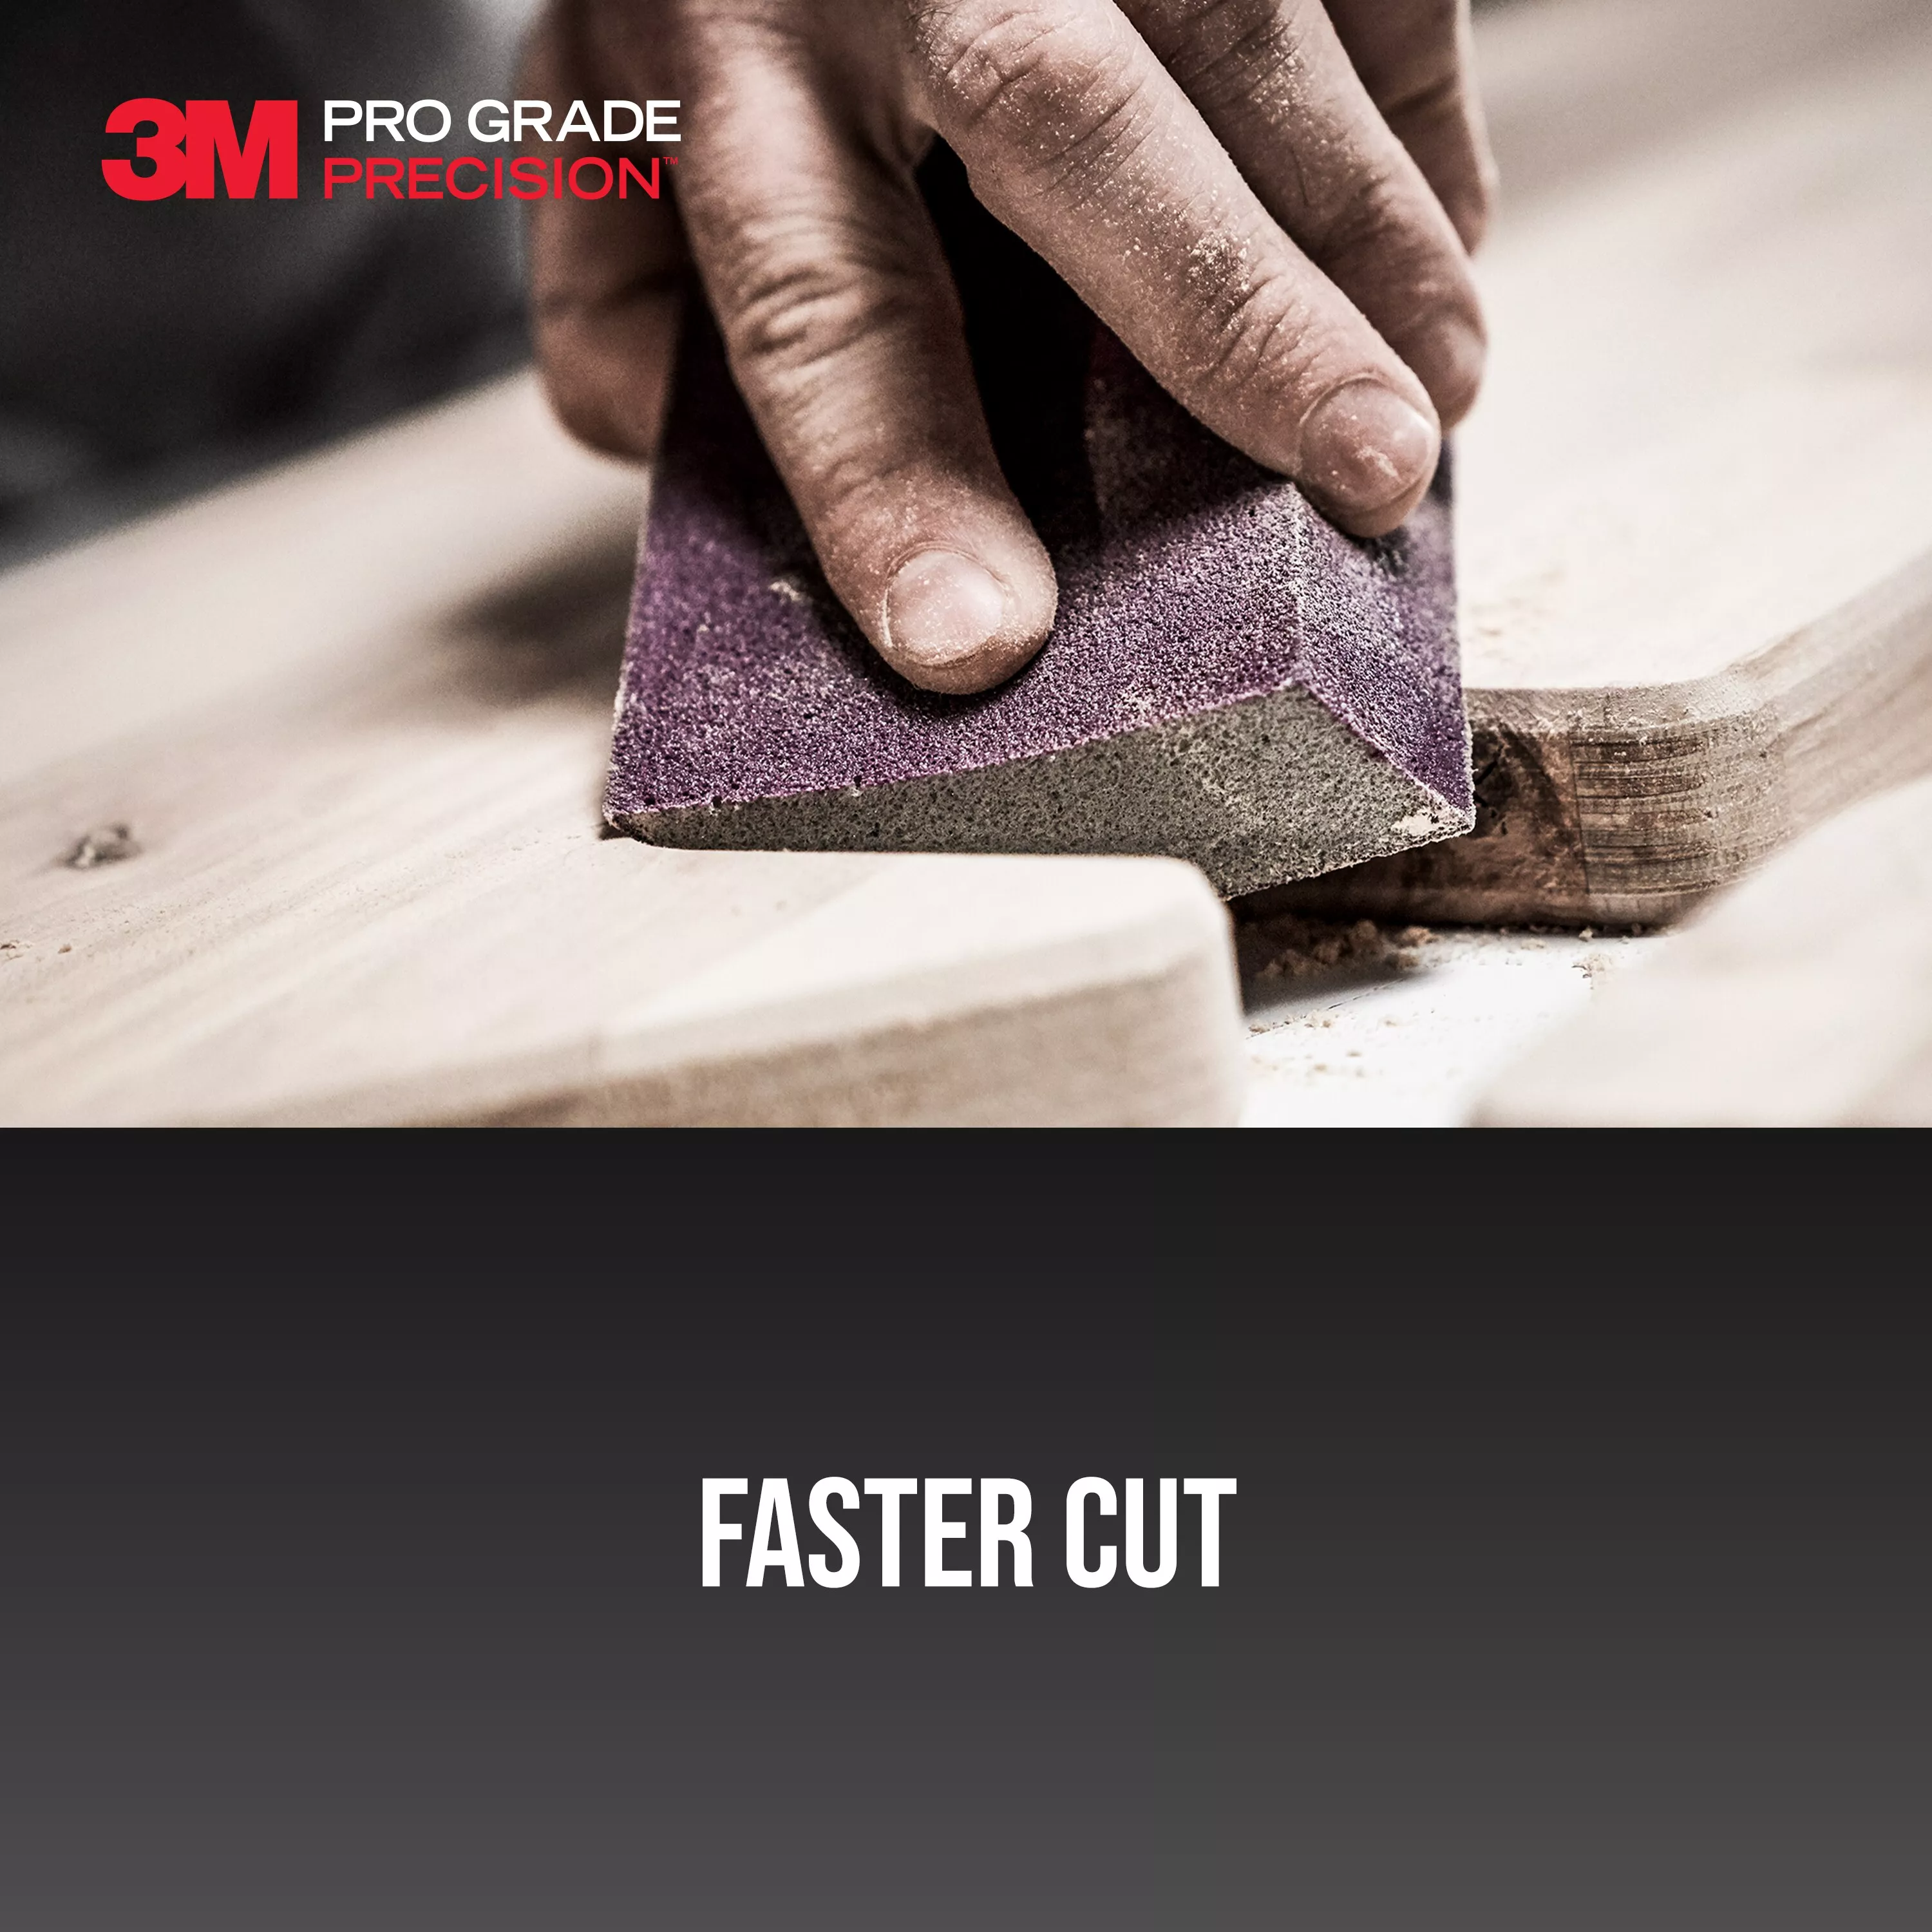 SKU 7100169977 | 3M™ Pro Grade Precision™ Faster Sanding Block Sponge